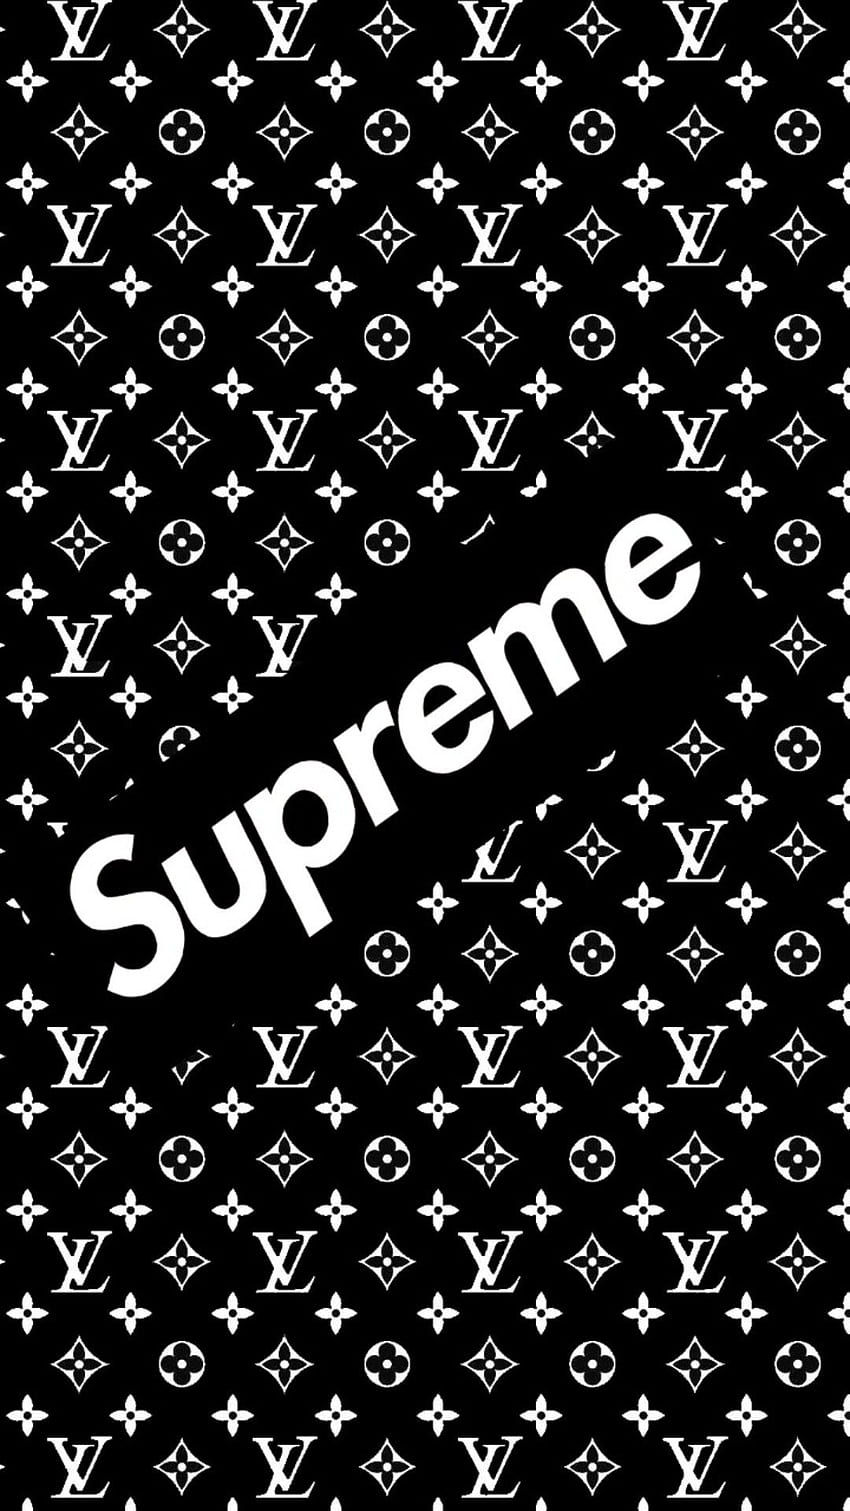 Free download Louis Vuitton Supreme teal Supreme iphone wallpaper